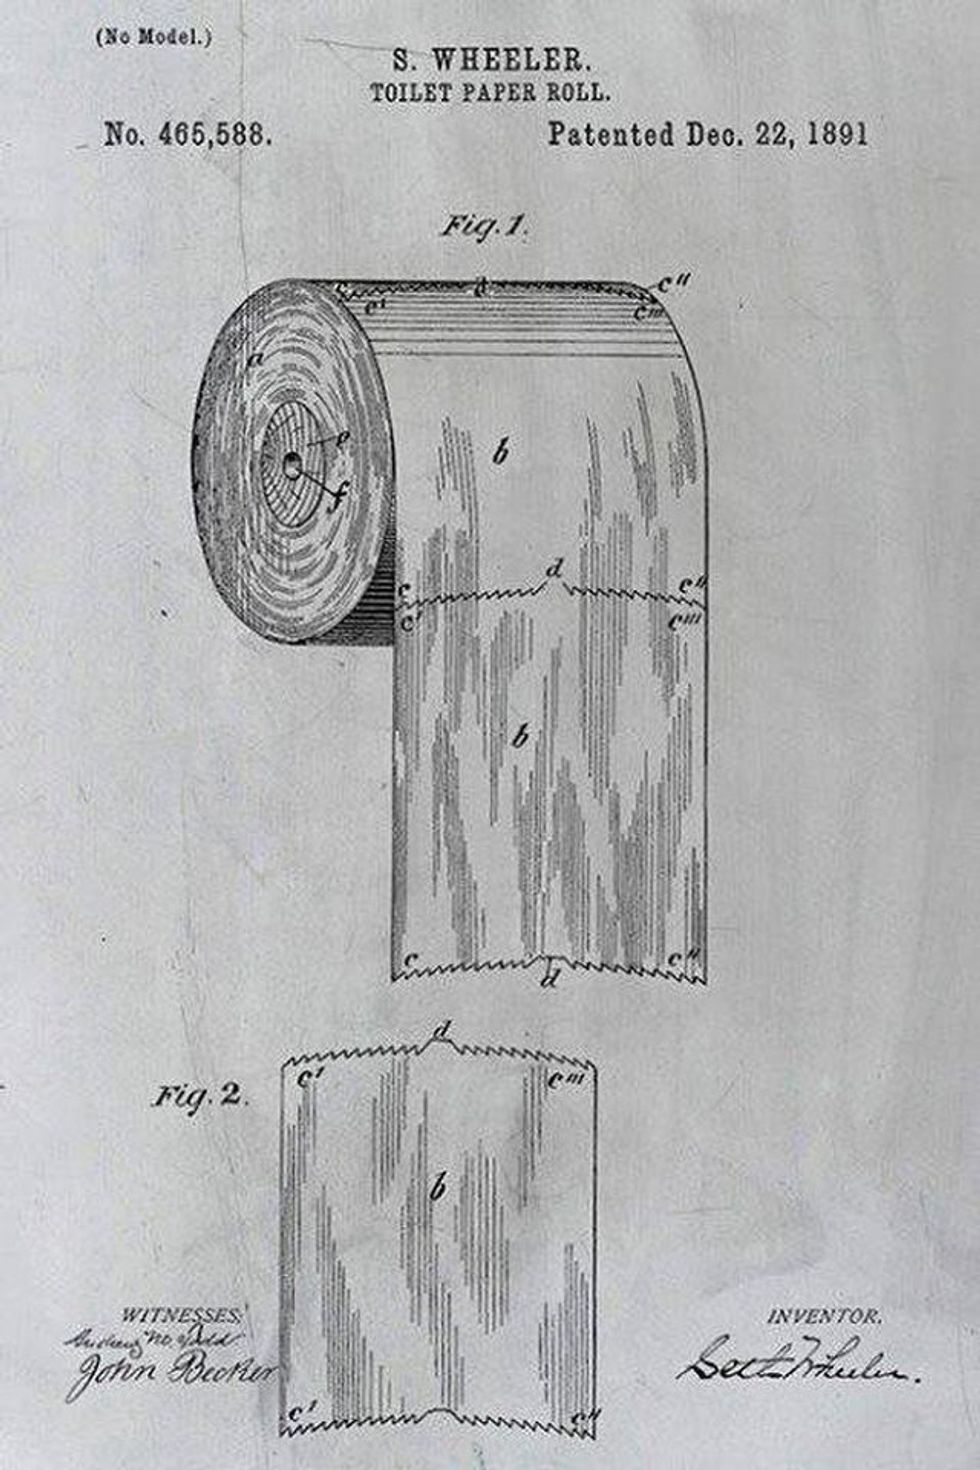 toilet paper patent image